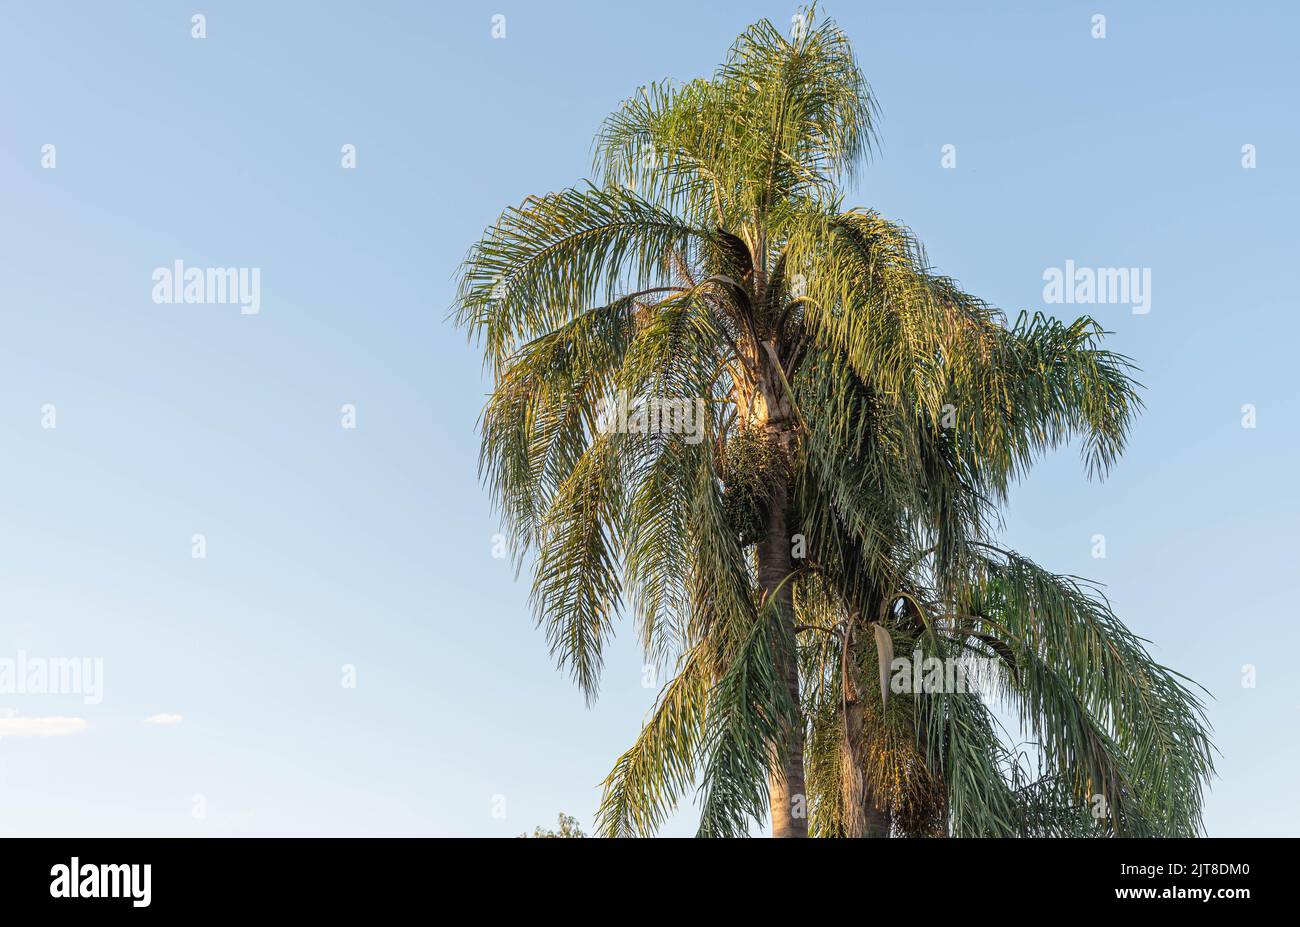 Syagrus romanzoffiana palm tree. Plant for landscaping. Botanical specimen. Shade palm tree. Stock Photo